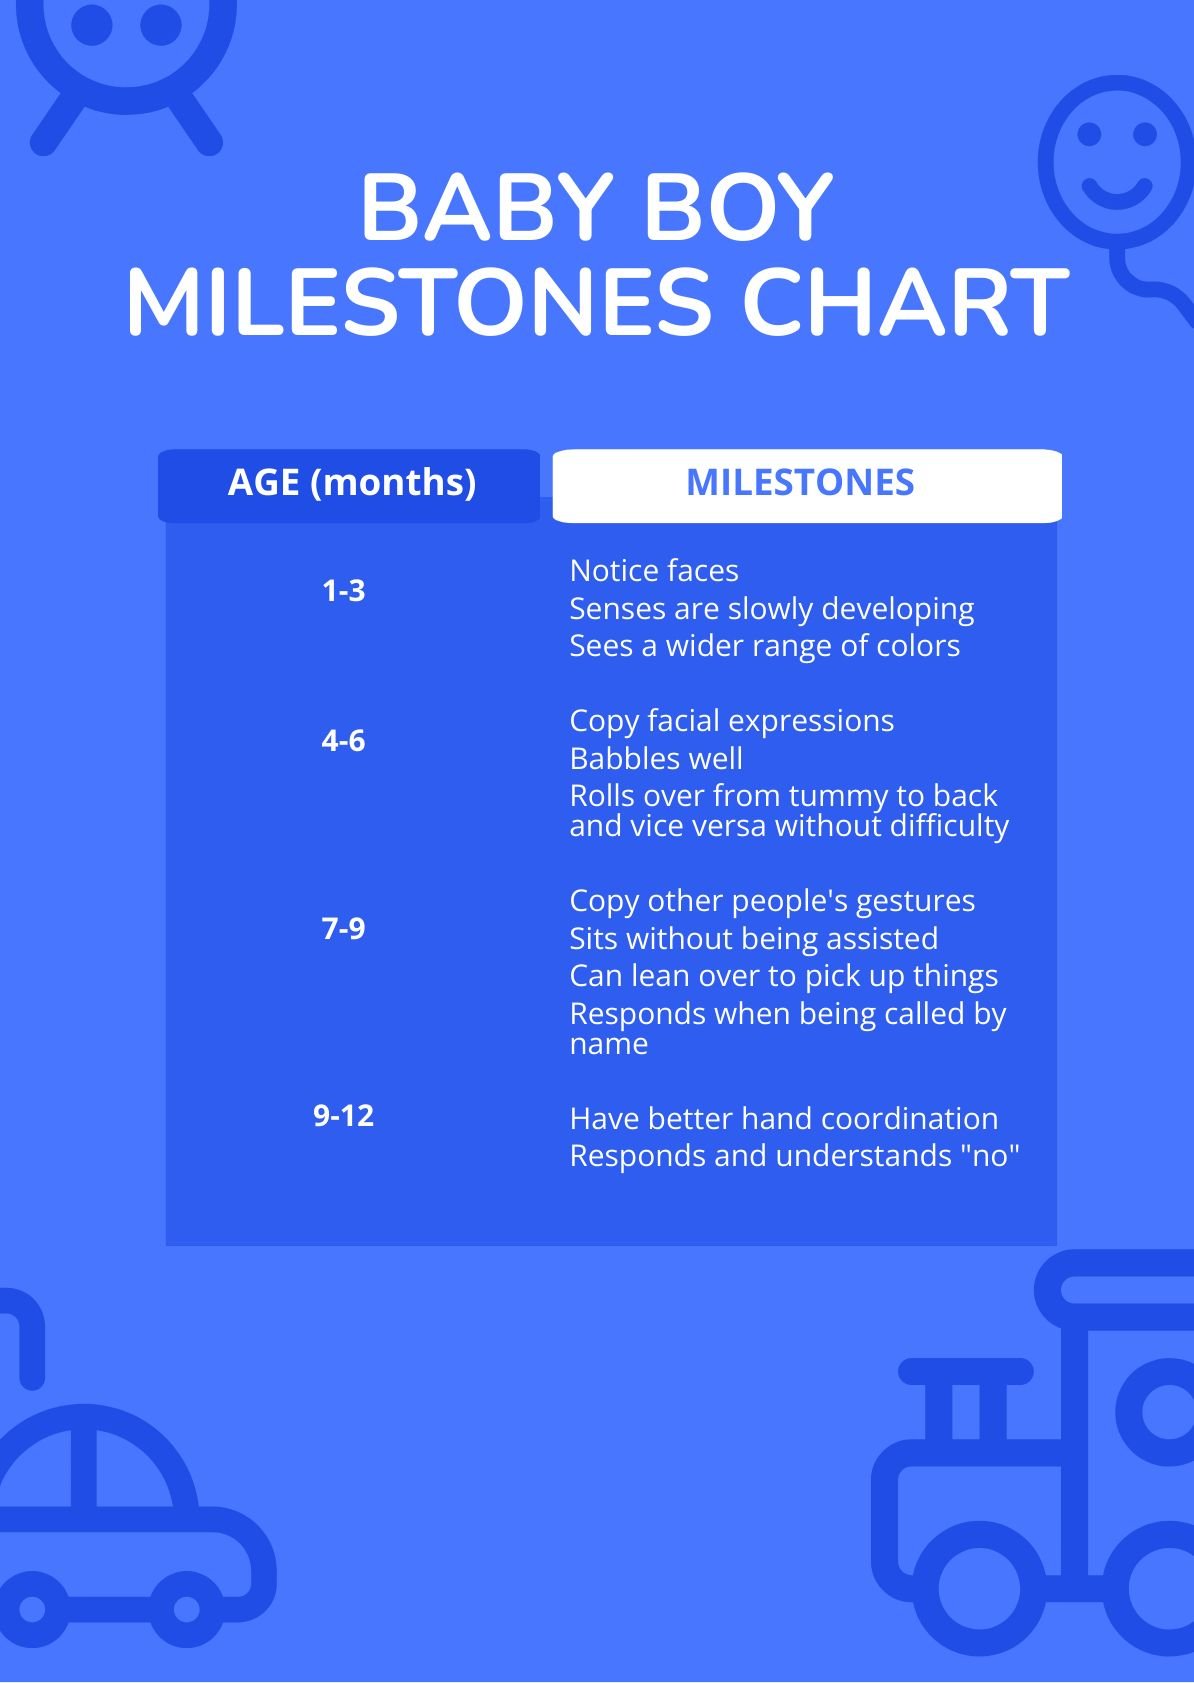 Baby Boy Milestones Chart in PDF